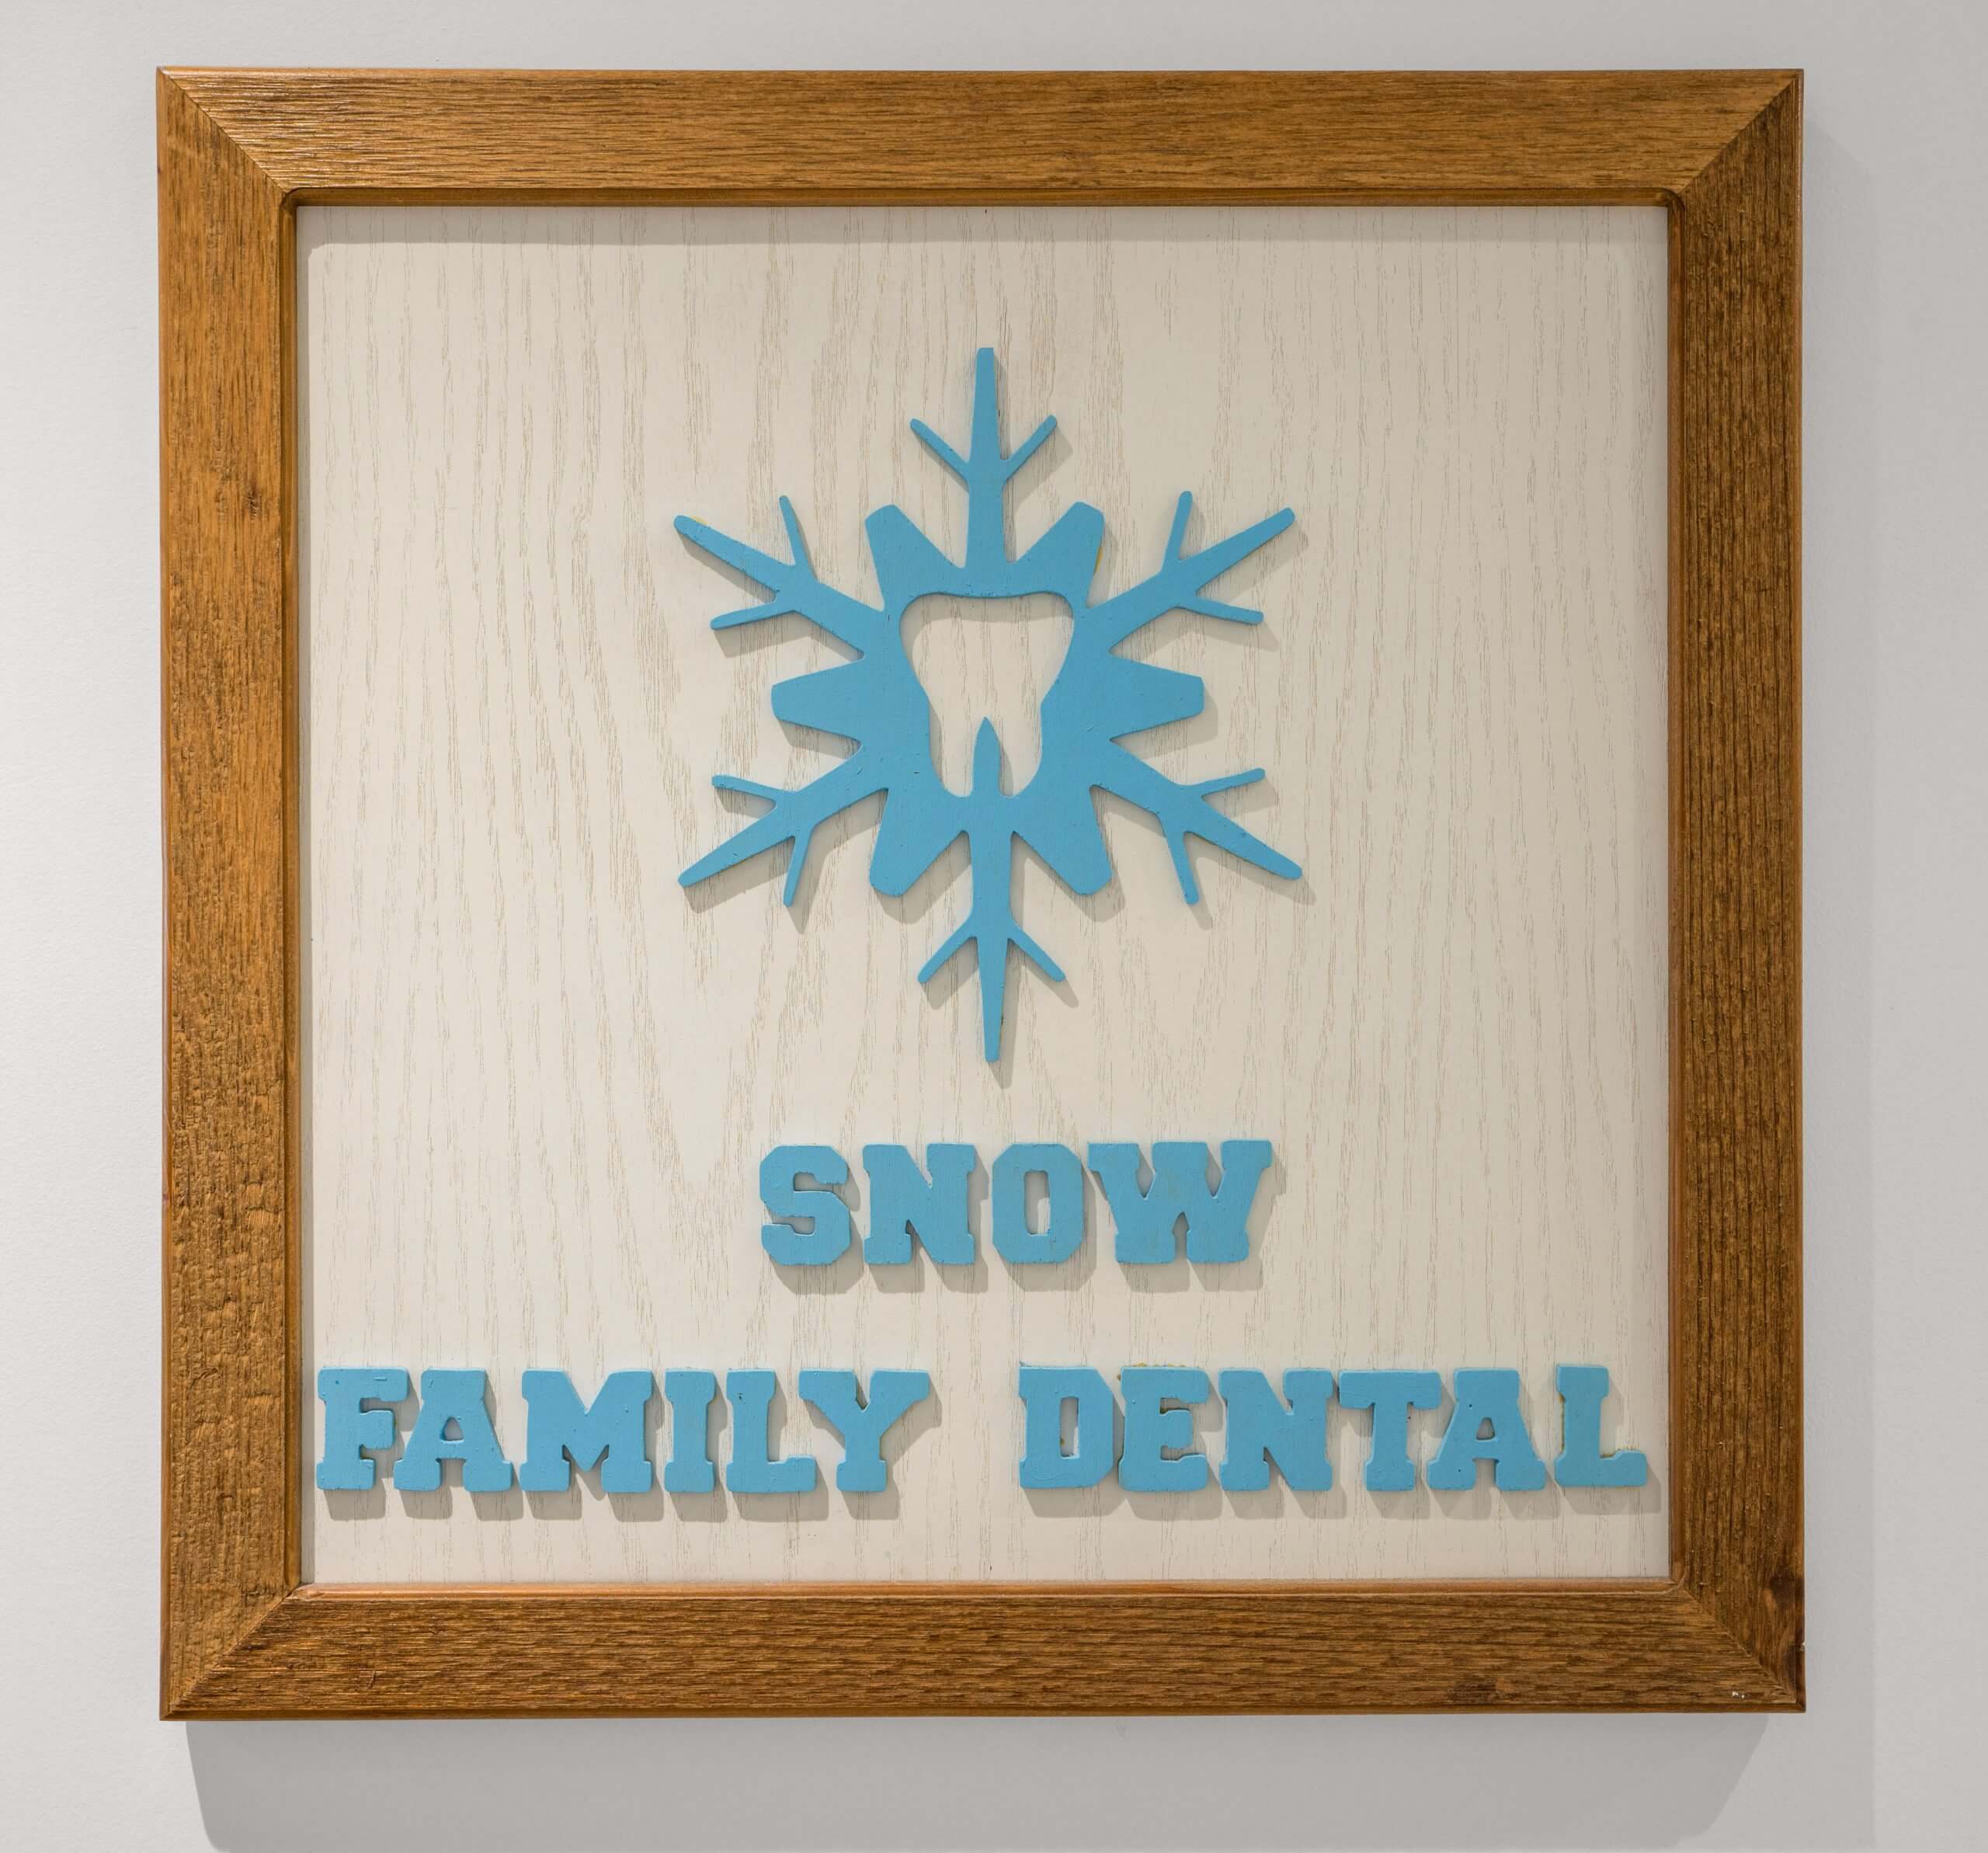 Photo #13 of this Snow Family Dental